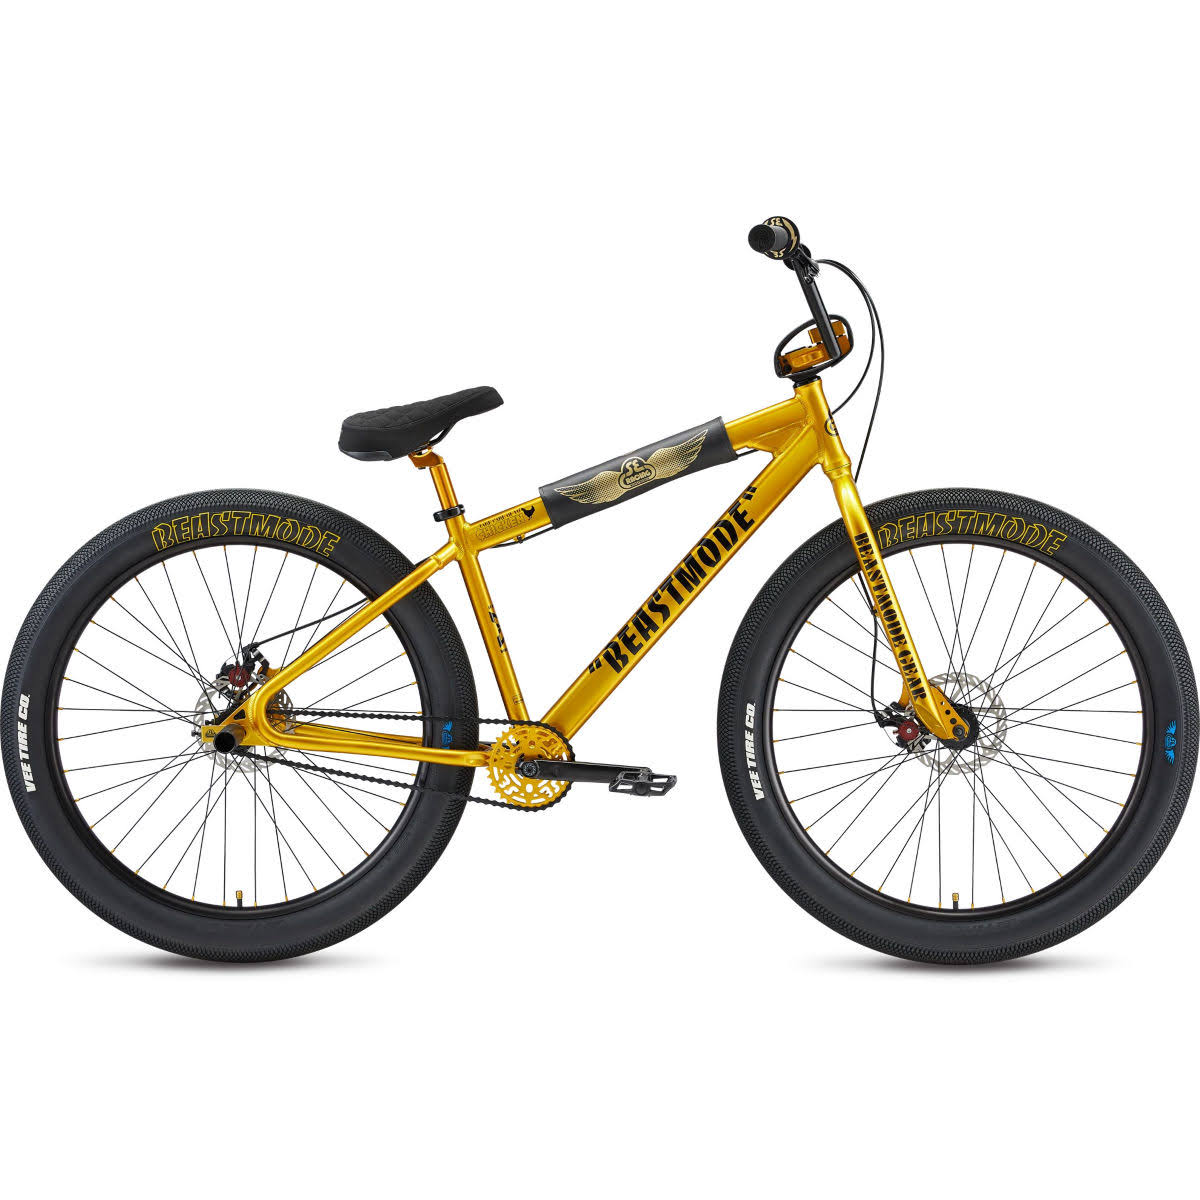 SE Bikes Beast Mode Ripper 27.5+ BMX Bike - One Size 27.5" Golden